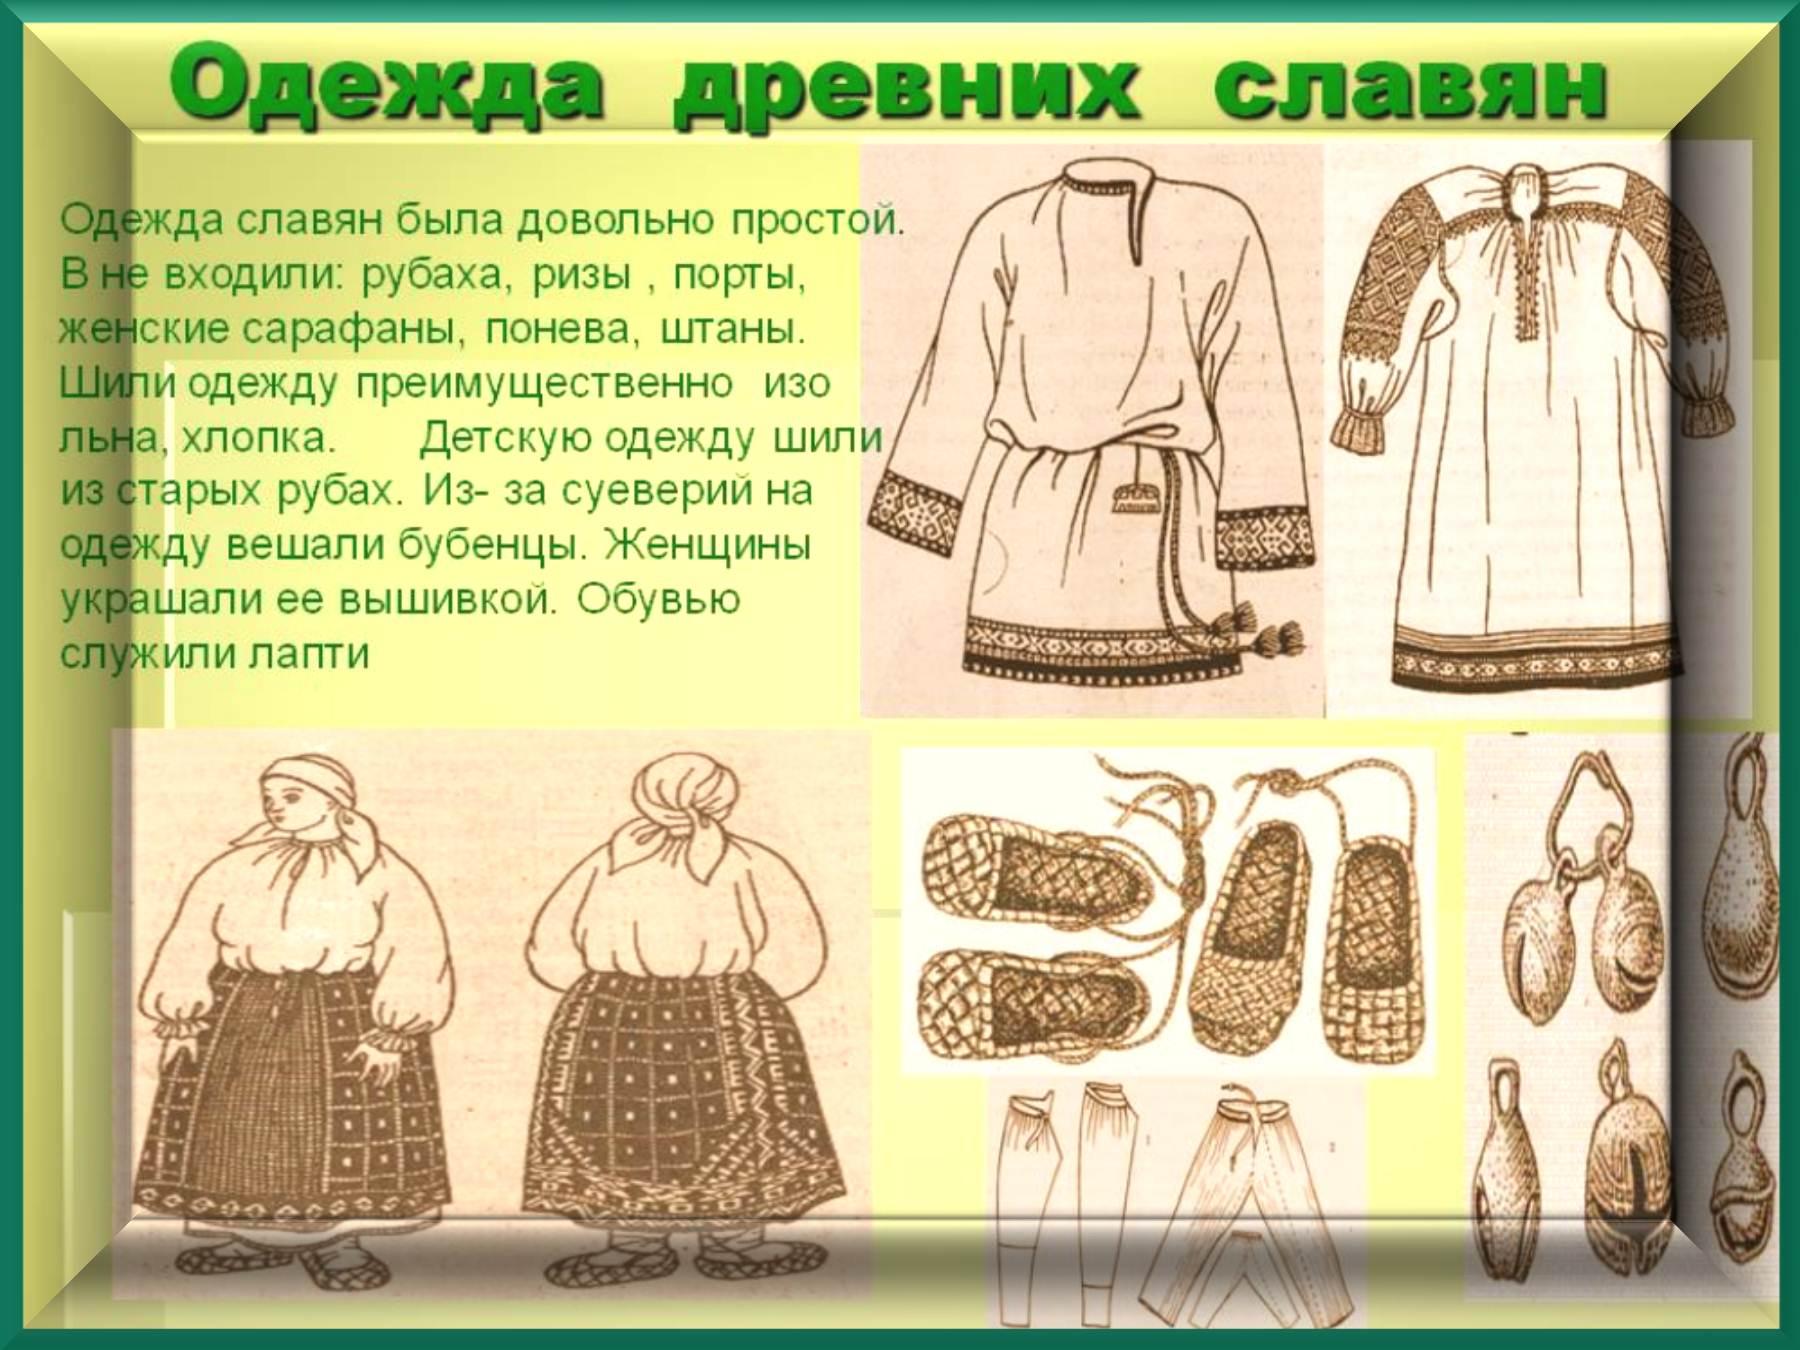 Одежда славян древней Руси 1 век